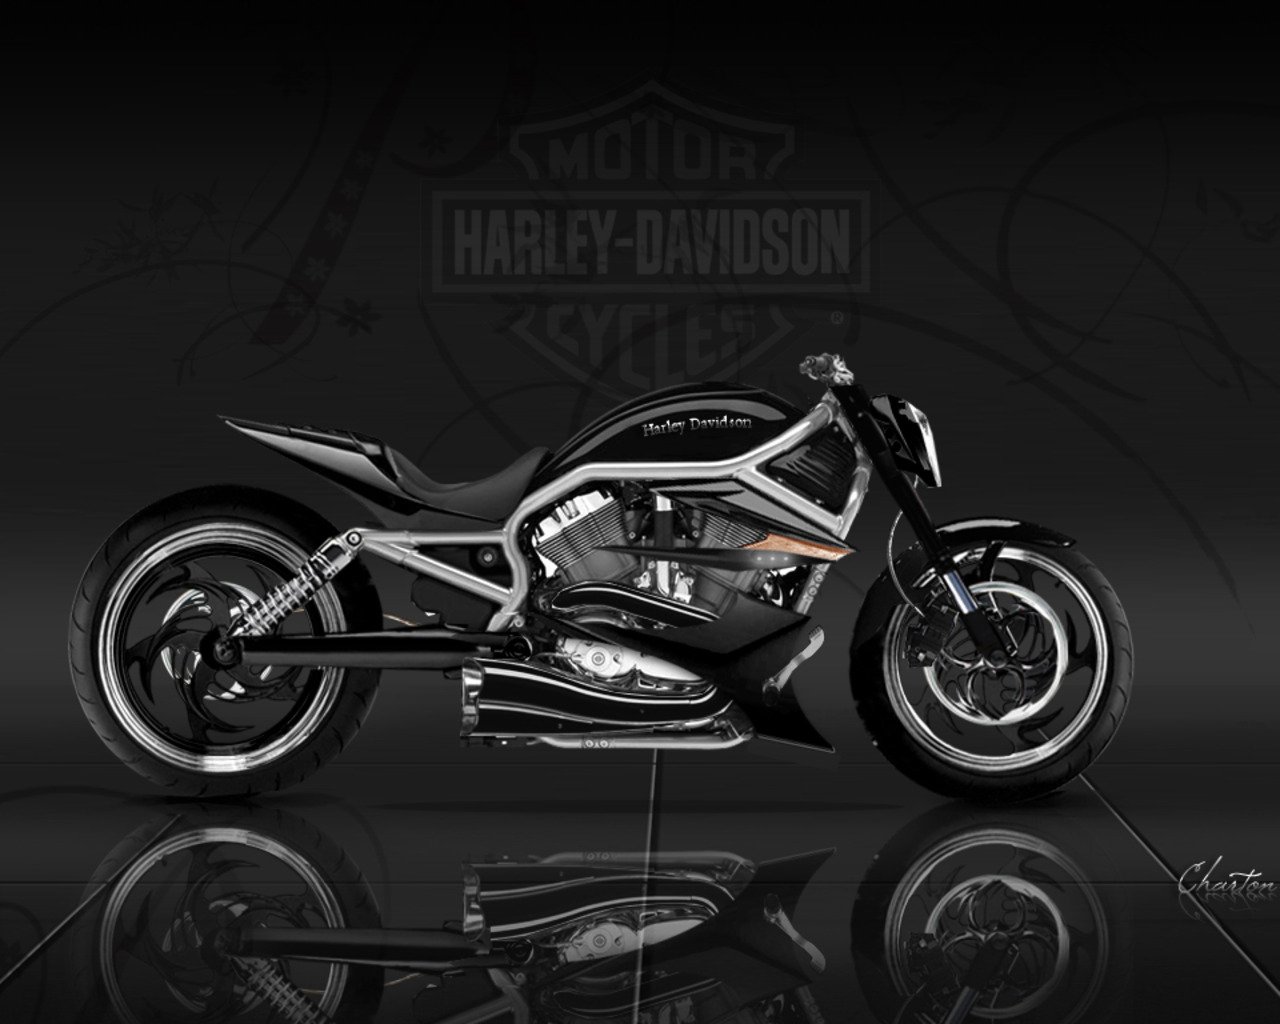 Harley Davidson Motorcycles Wallpapers Risen Sources